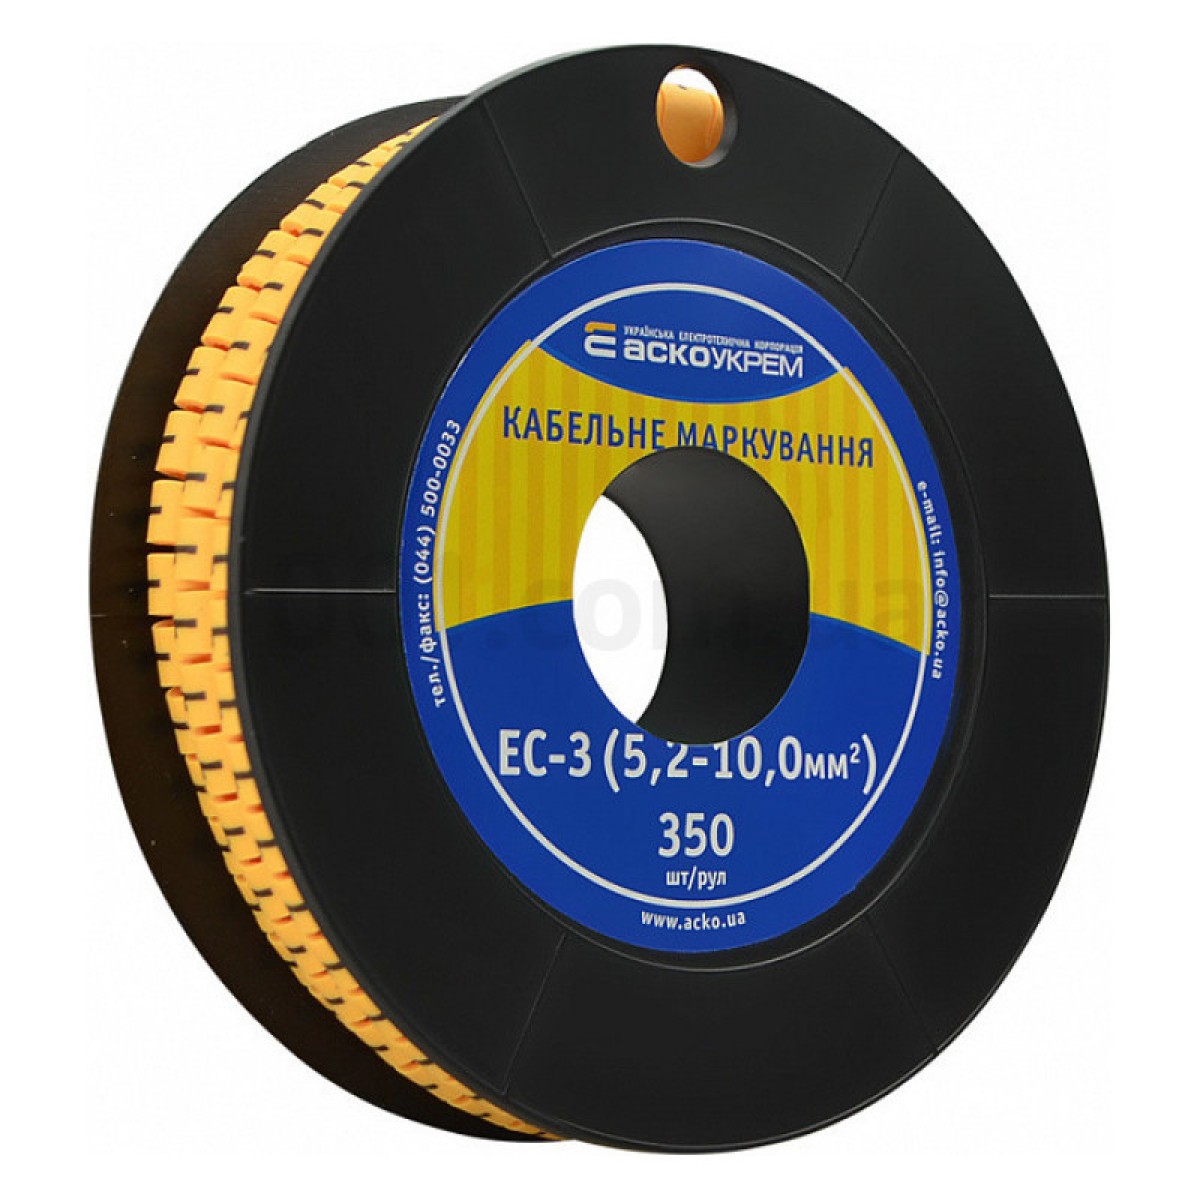 Маркировка EC-3 для кабеля 5,2-10,0 мм² символ «1» (рулон 250 шт.), АСКО-УКРЕМ 98_98.jpg - фото 1